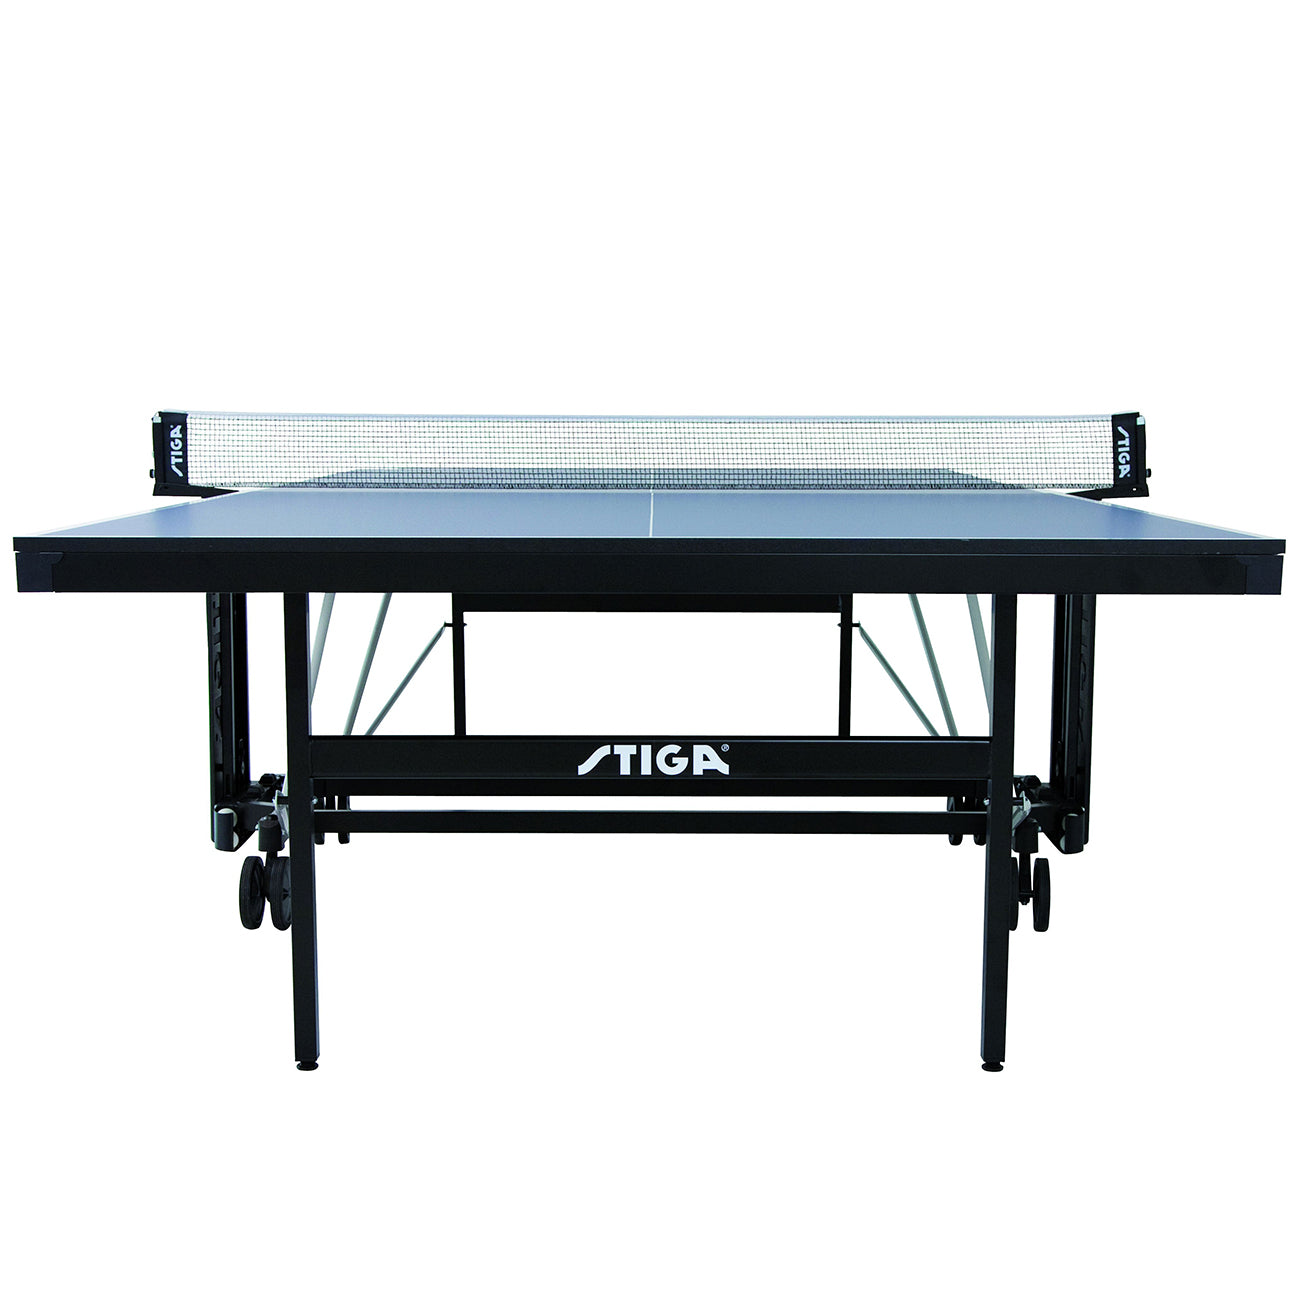 Stiga Performance CS Indoor Table Tennis Table